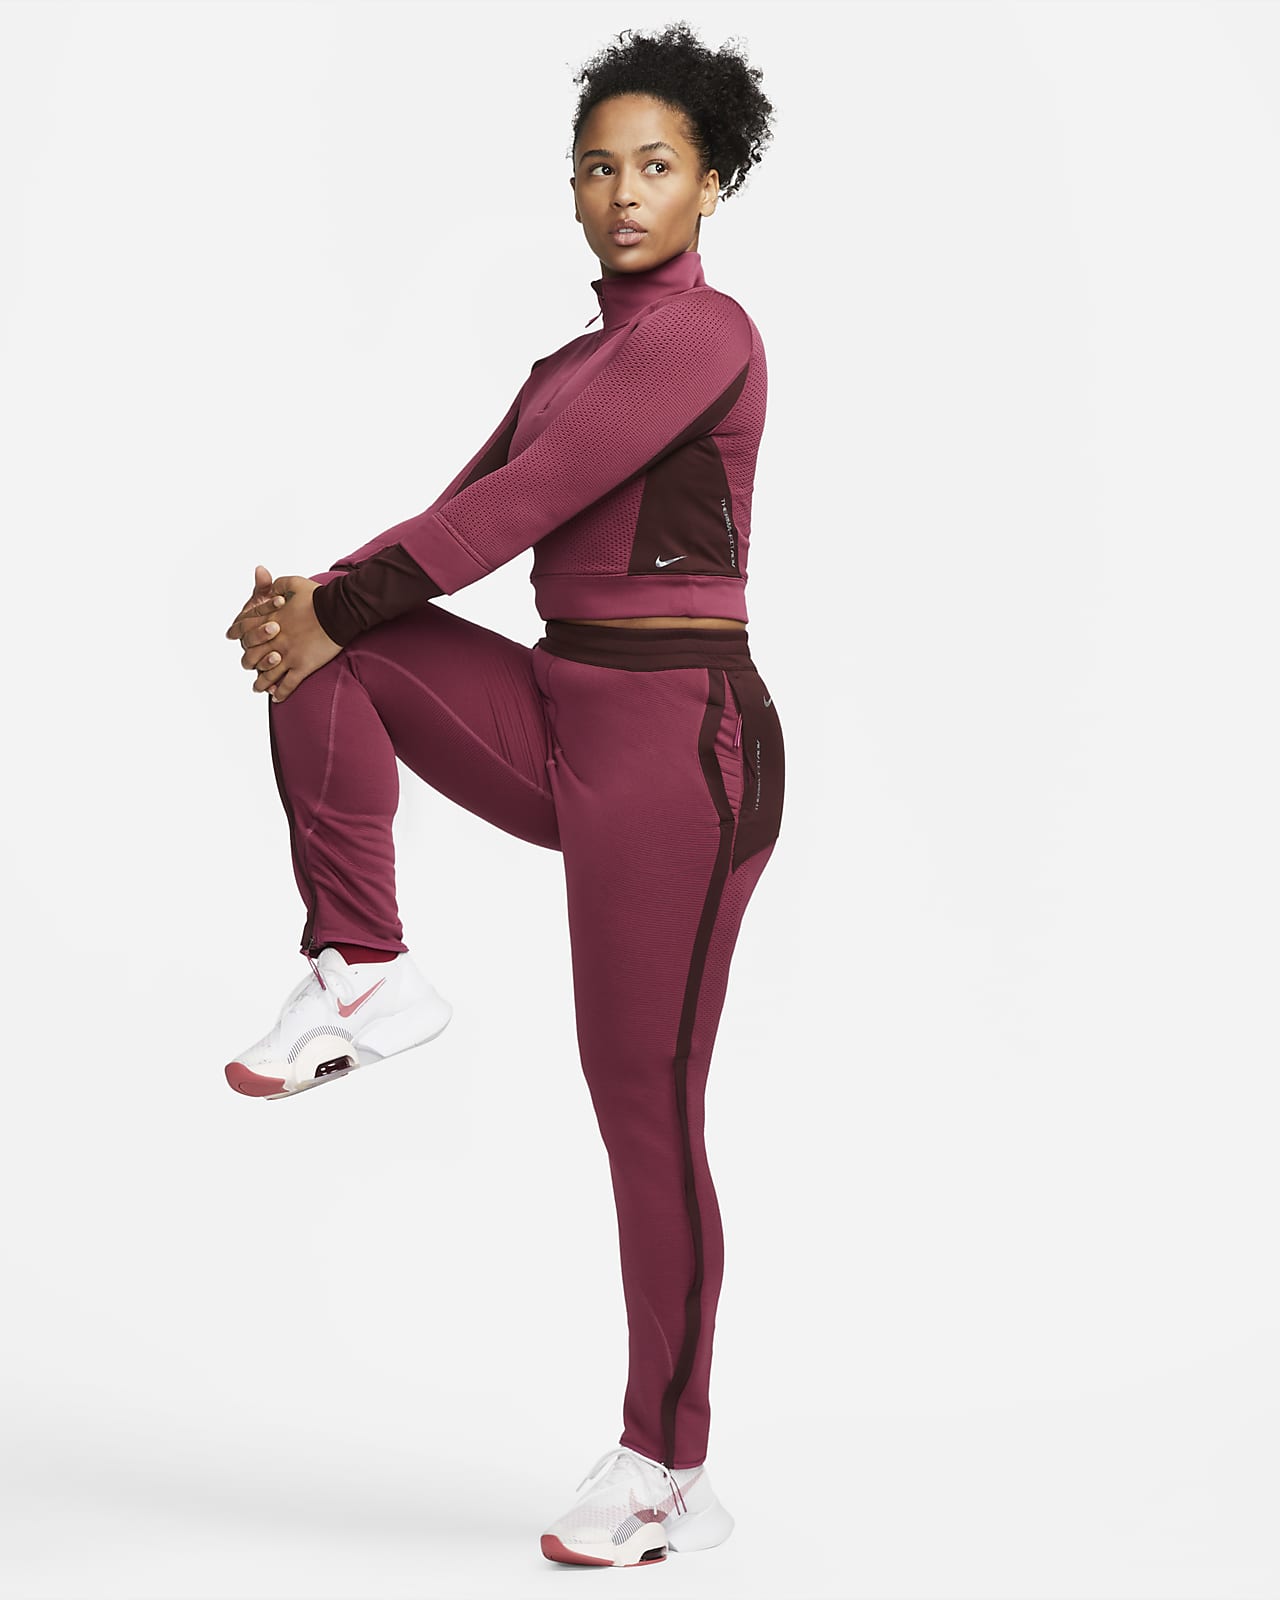 Nike Women's Therma Training Sweat Pants (Black, X-Small) 